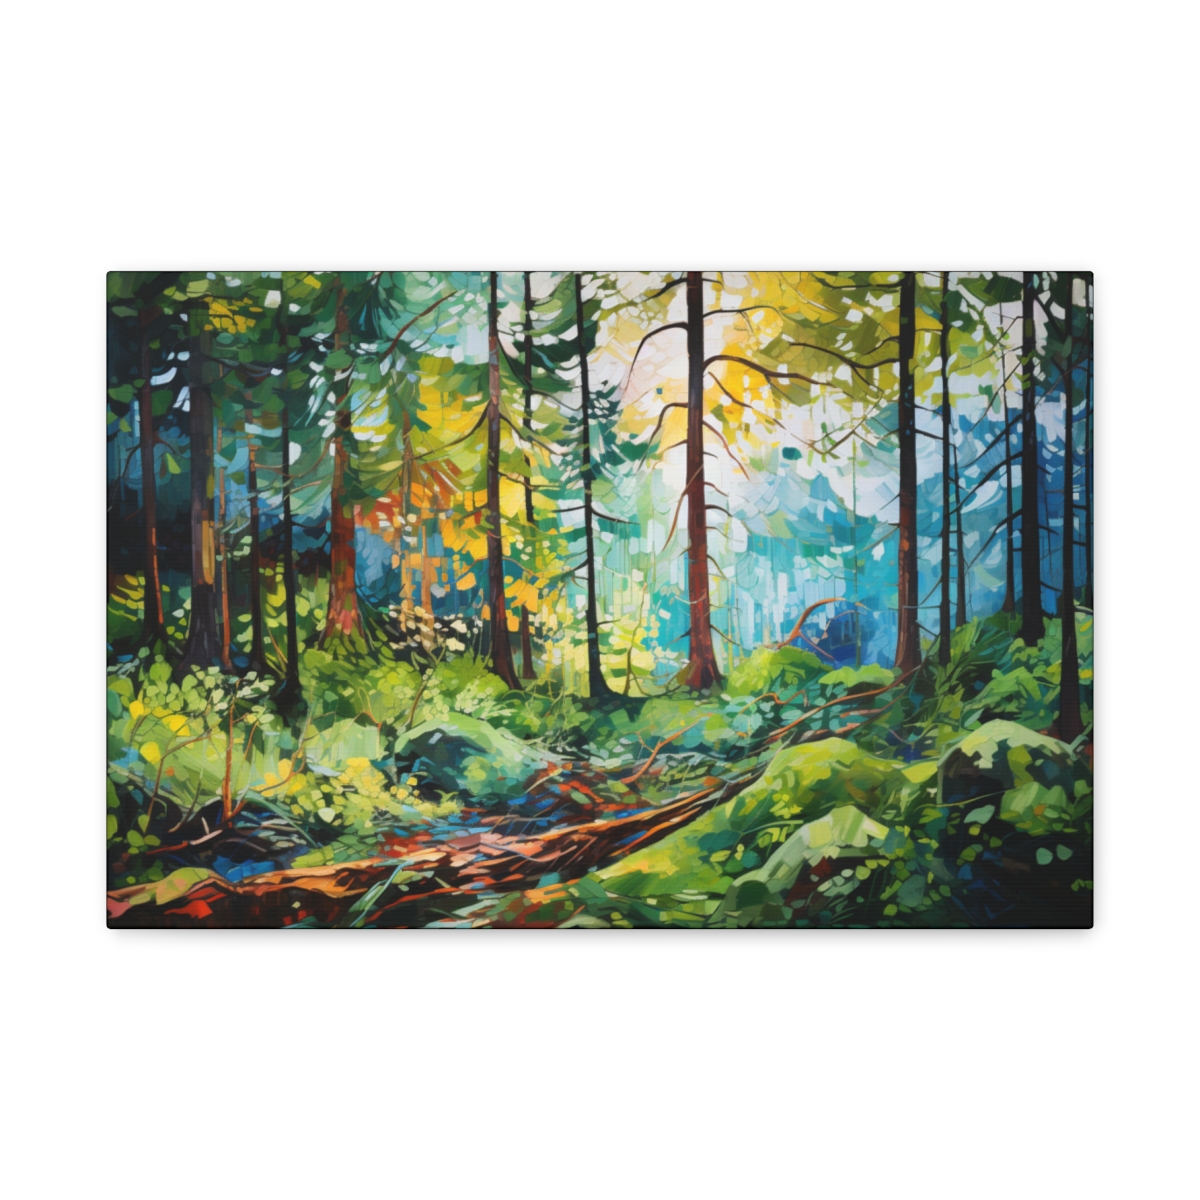 Forest Art Canvas Print: Peaceful Gateway